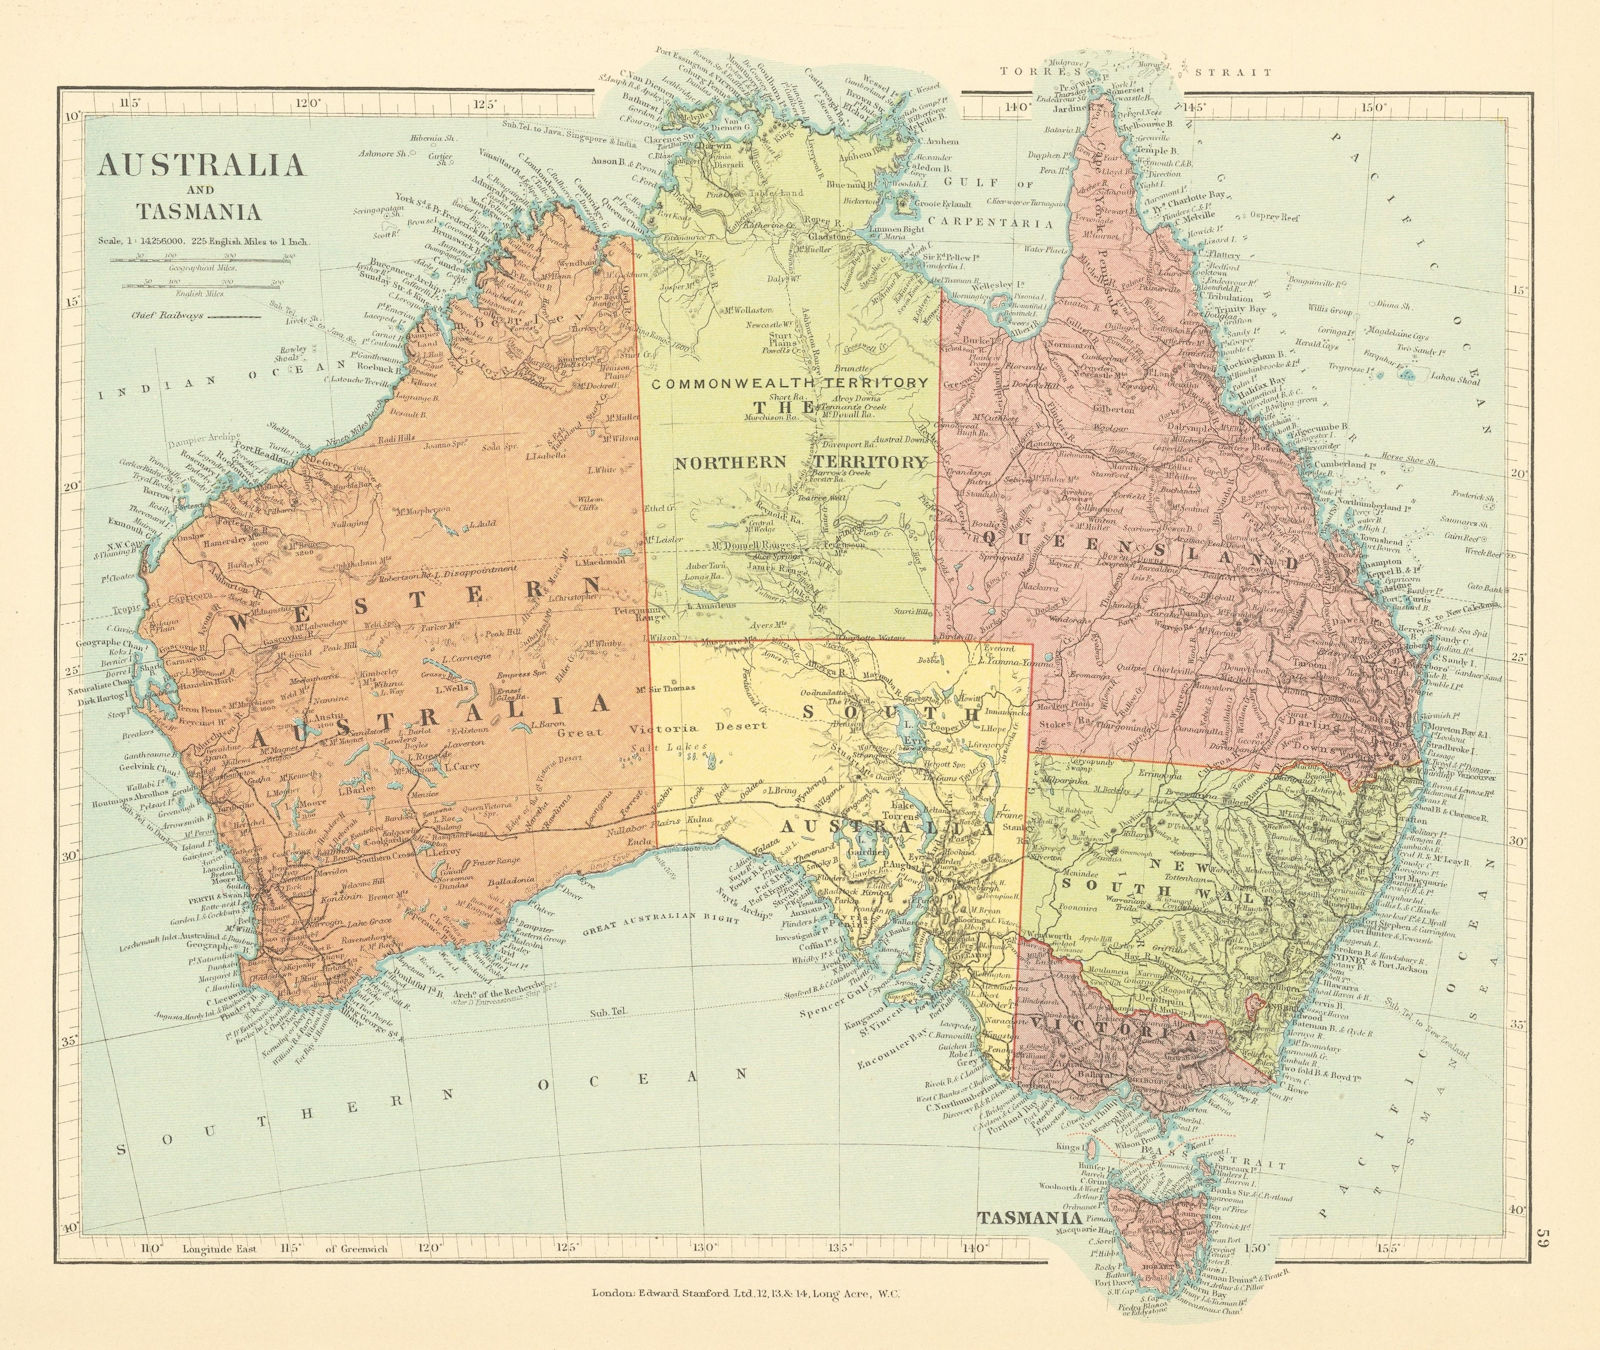 Associate Product Australia Tasmania Northern Territory Commonwealth Territory STANFORD c1925 map